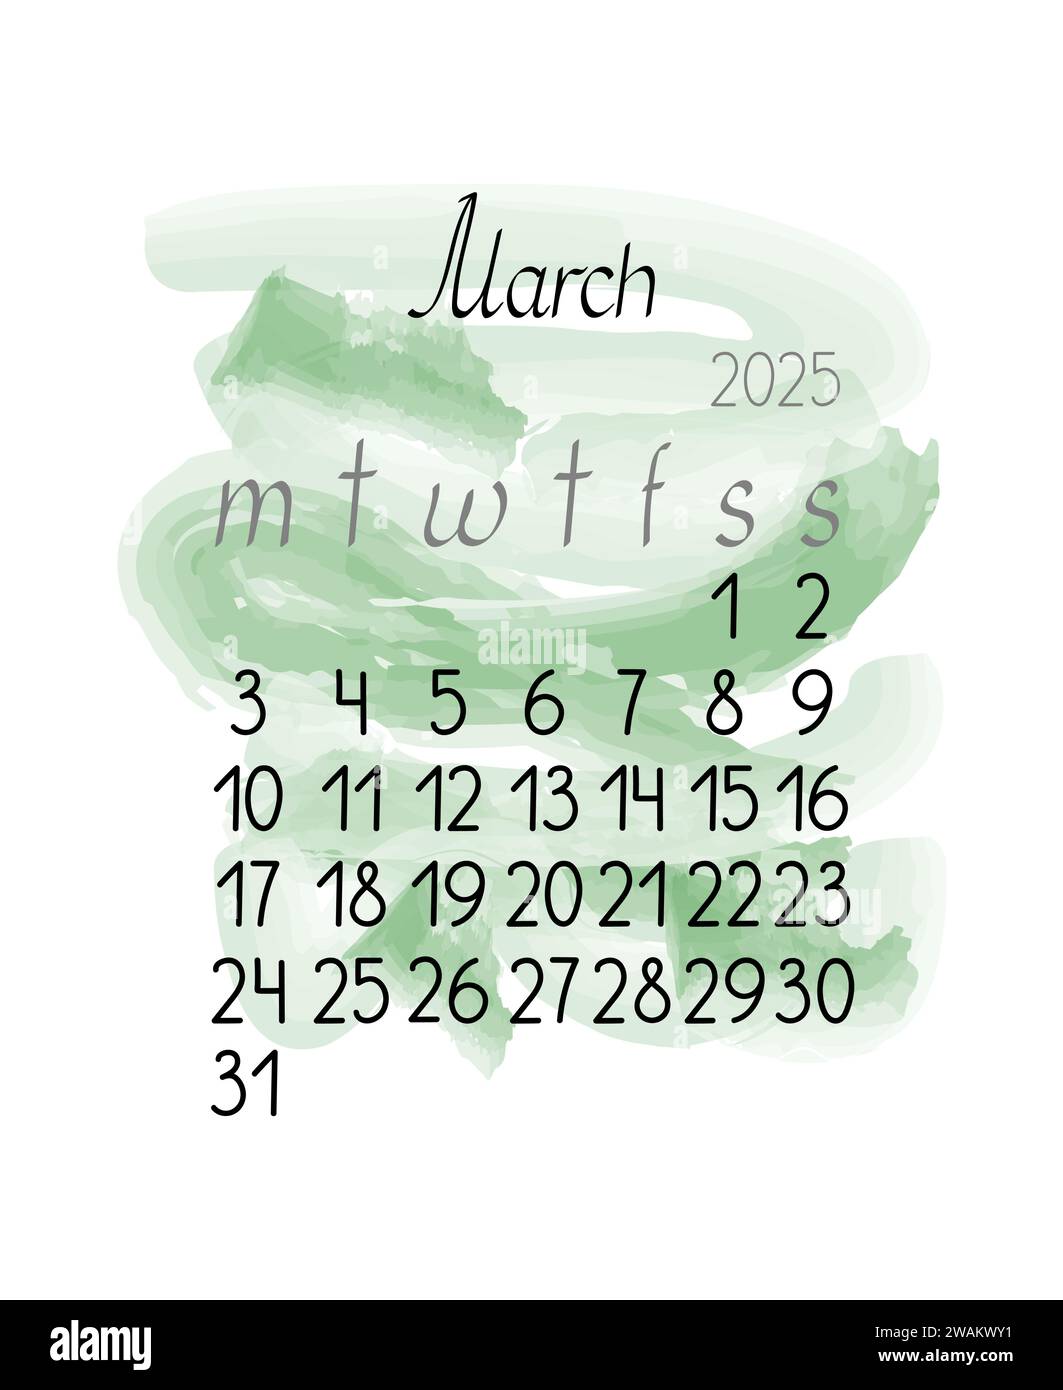 2032 year vintage calendar weeks start on sunday Vector Image, 2032